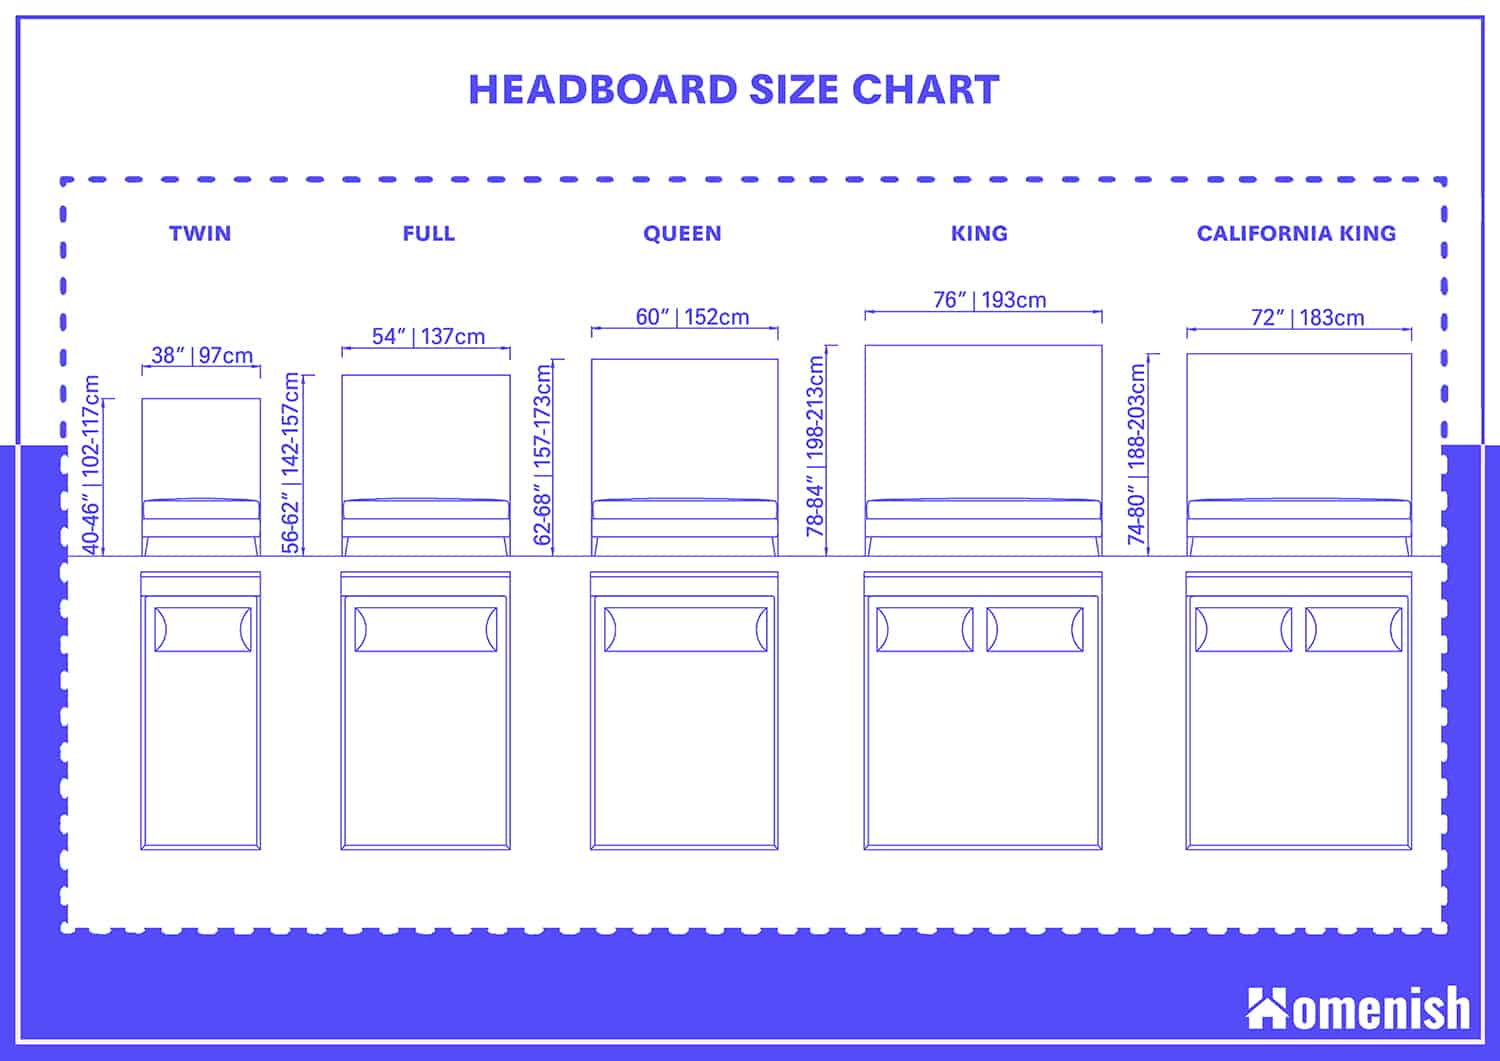 Standard Headboard Dimensions, What Size Should A Queen Headboard Be